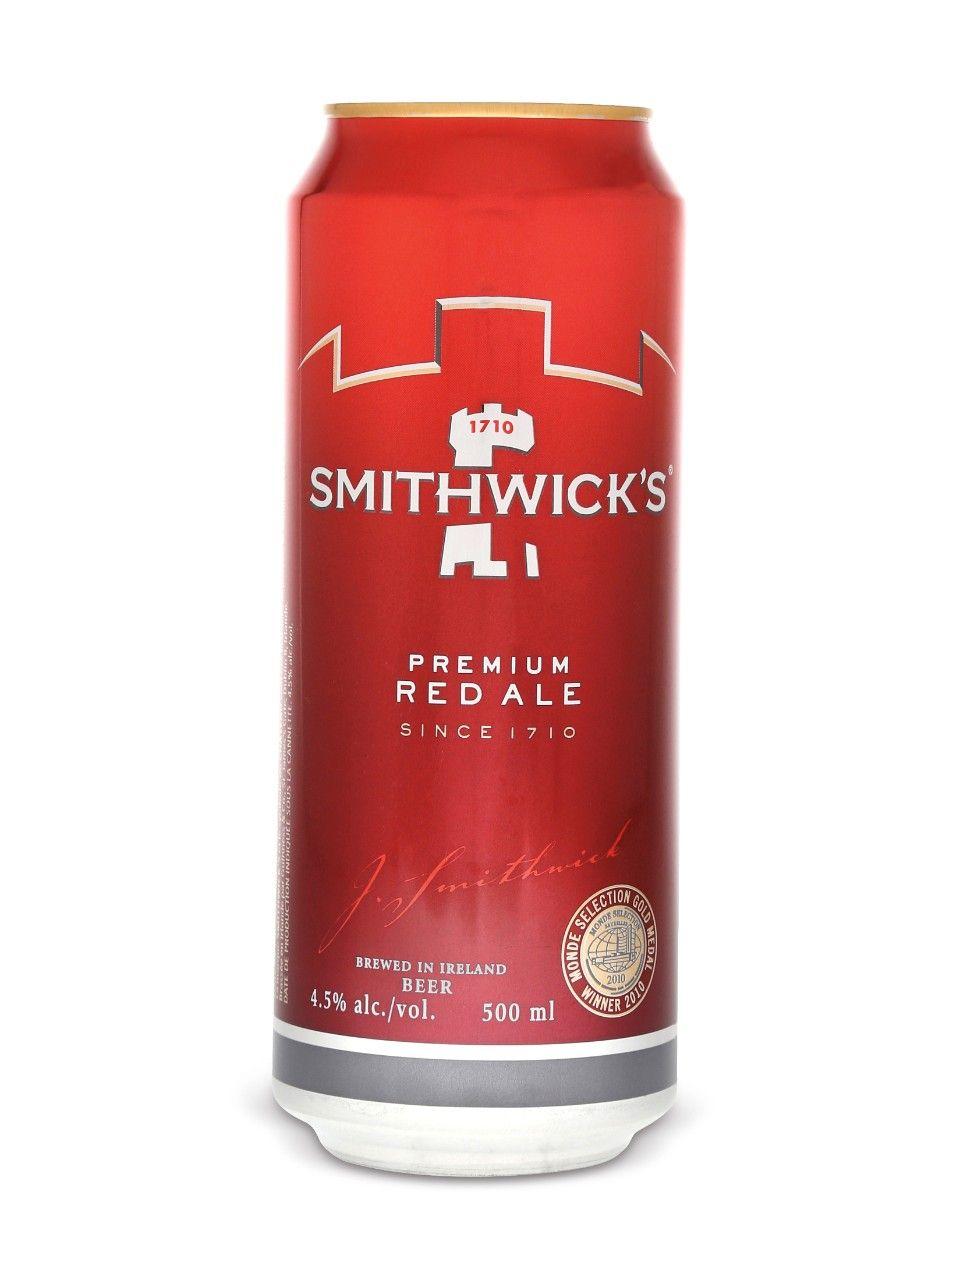 Smithwick's Beer Logo - Smithwick's Ale